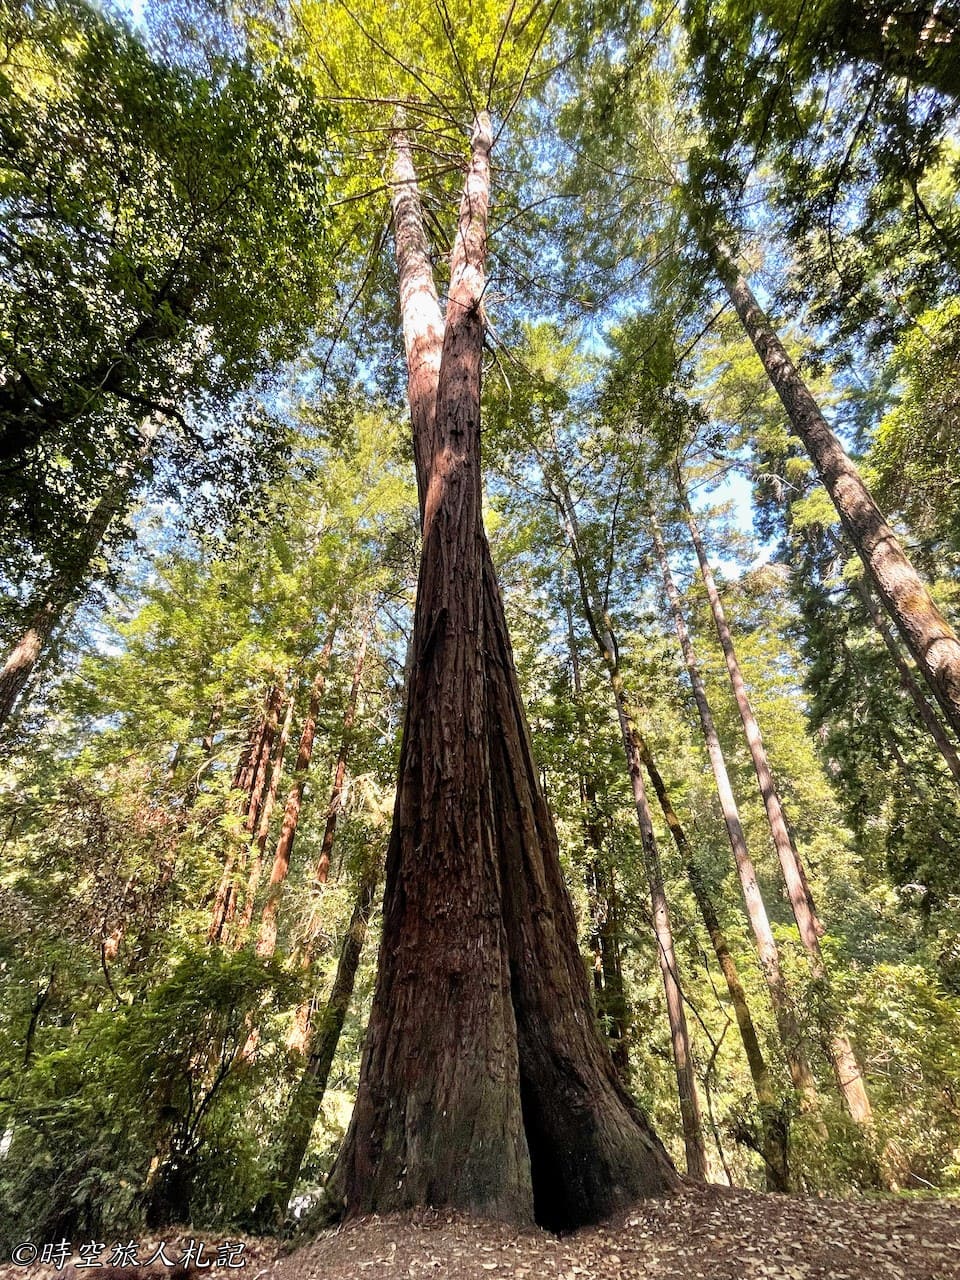 Portola redwood state park 9